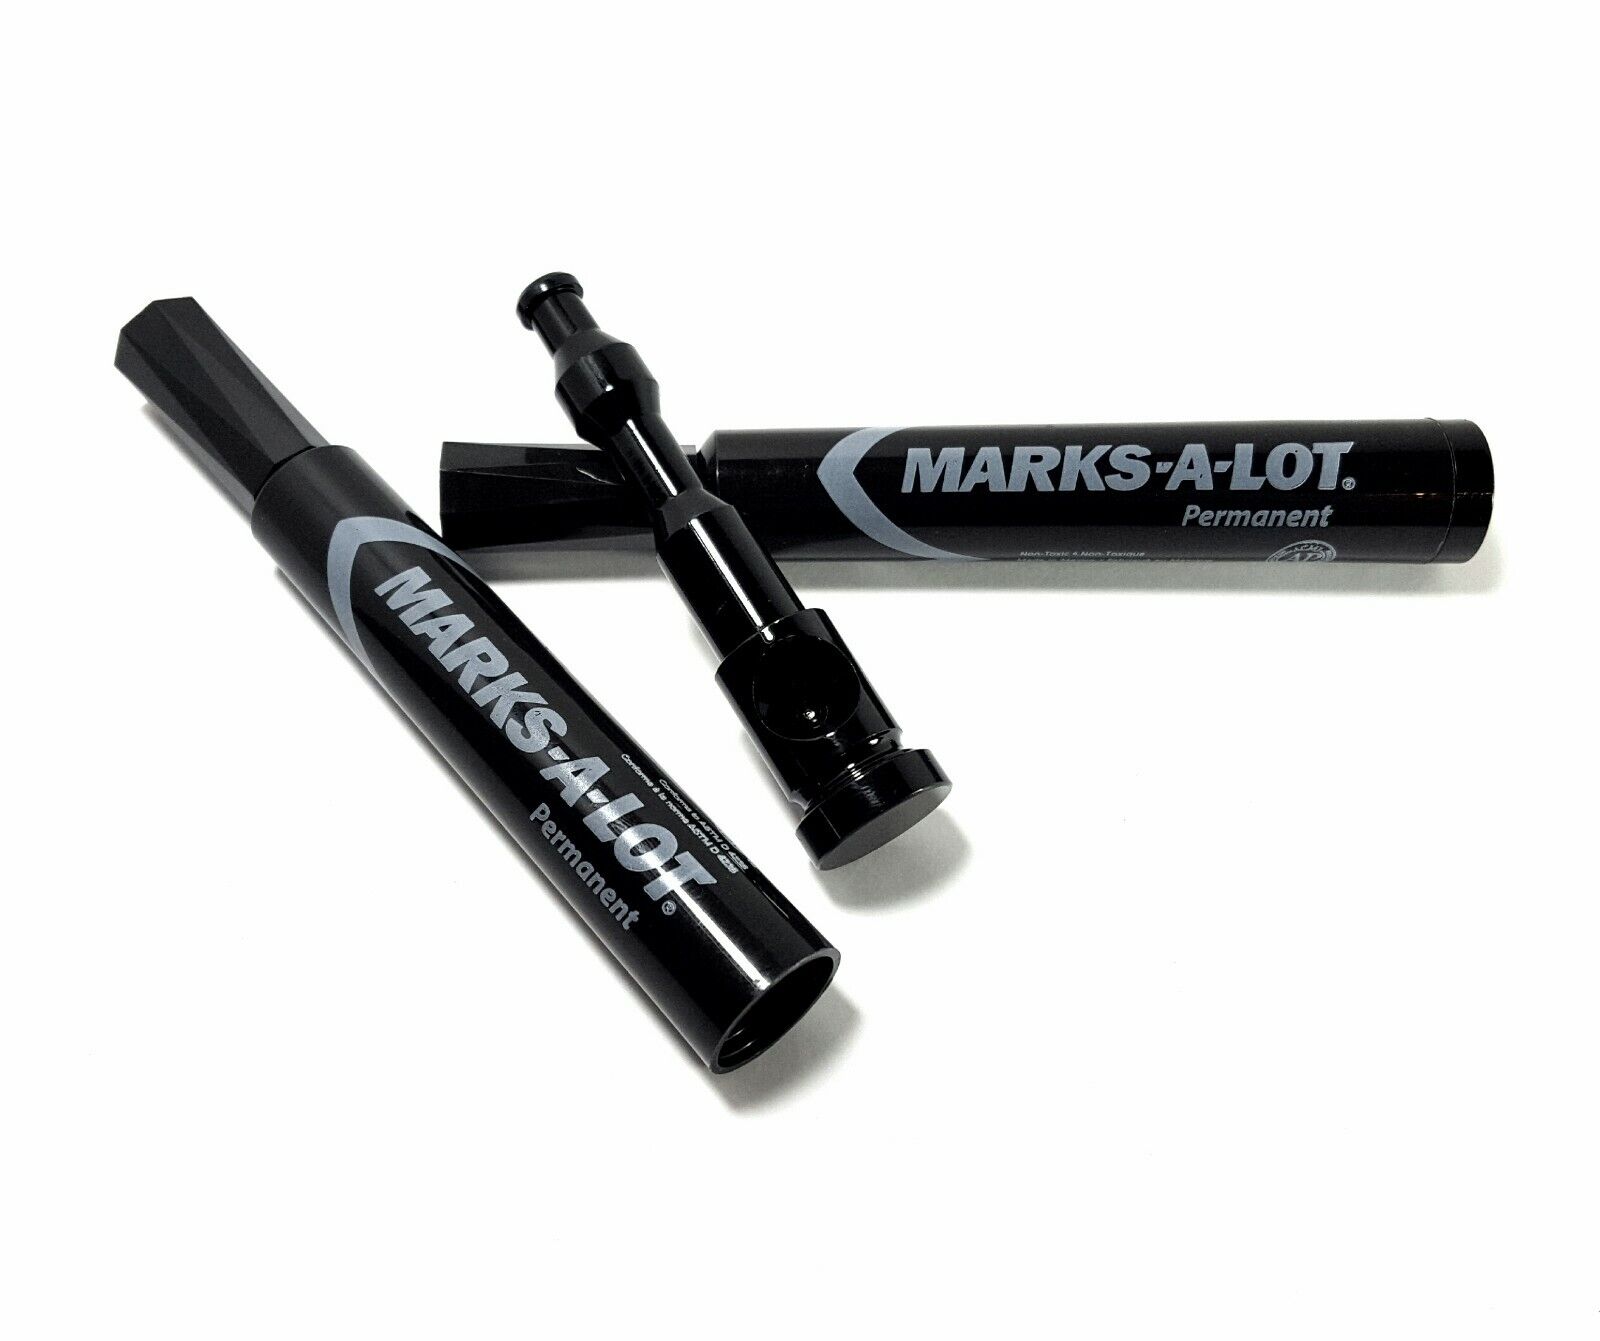 Magic Marker Secret Stash Pipe Buy 2 Get 1 Free (Black-Black)